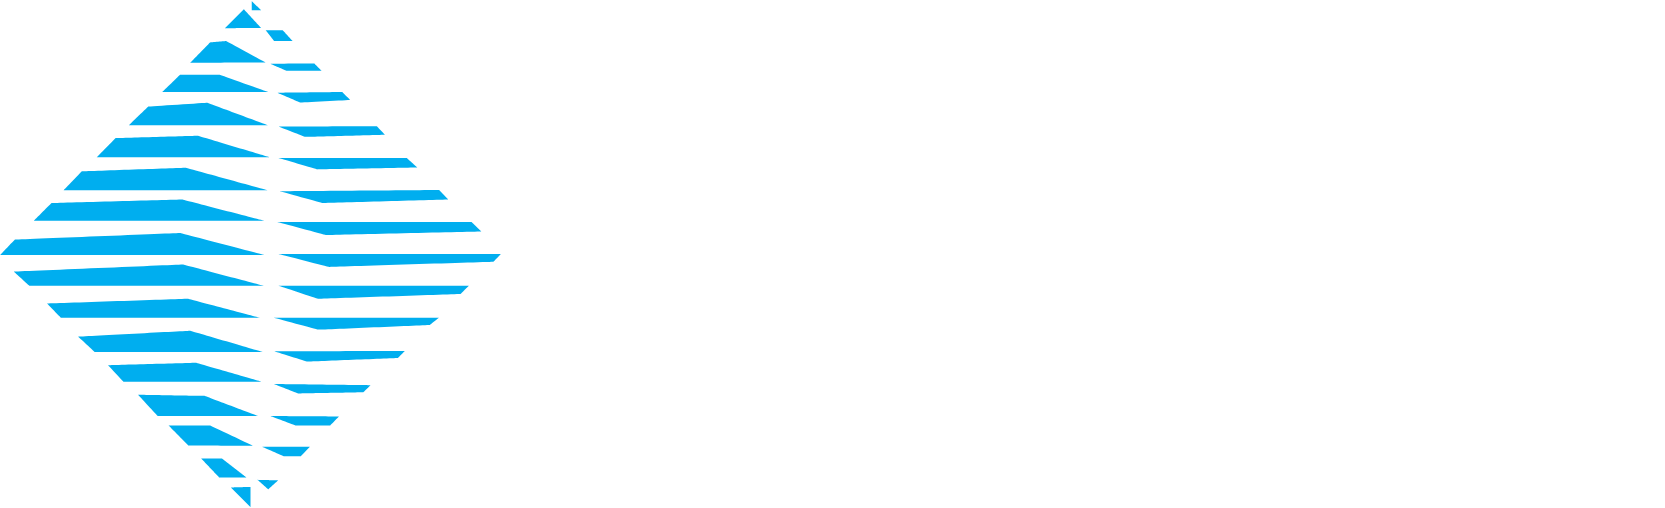 Oneok logo large for dark backgrounds (transparent PNG)